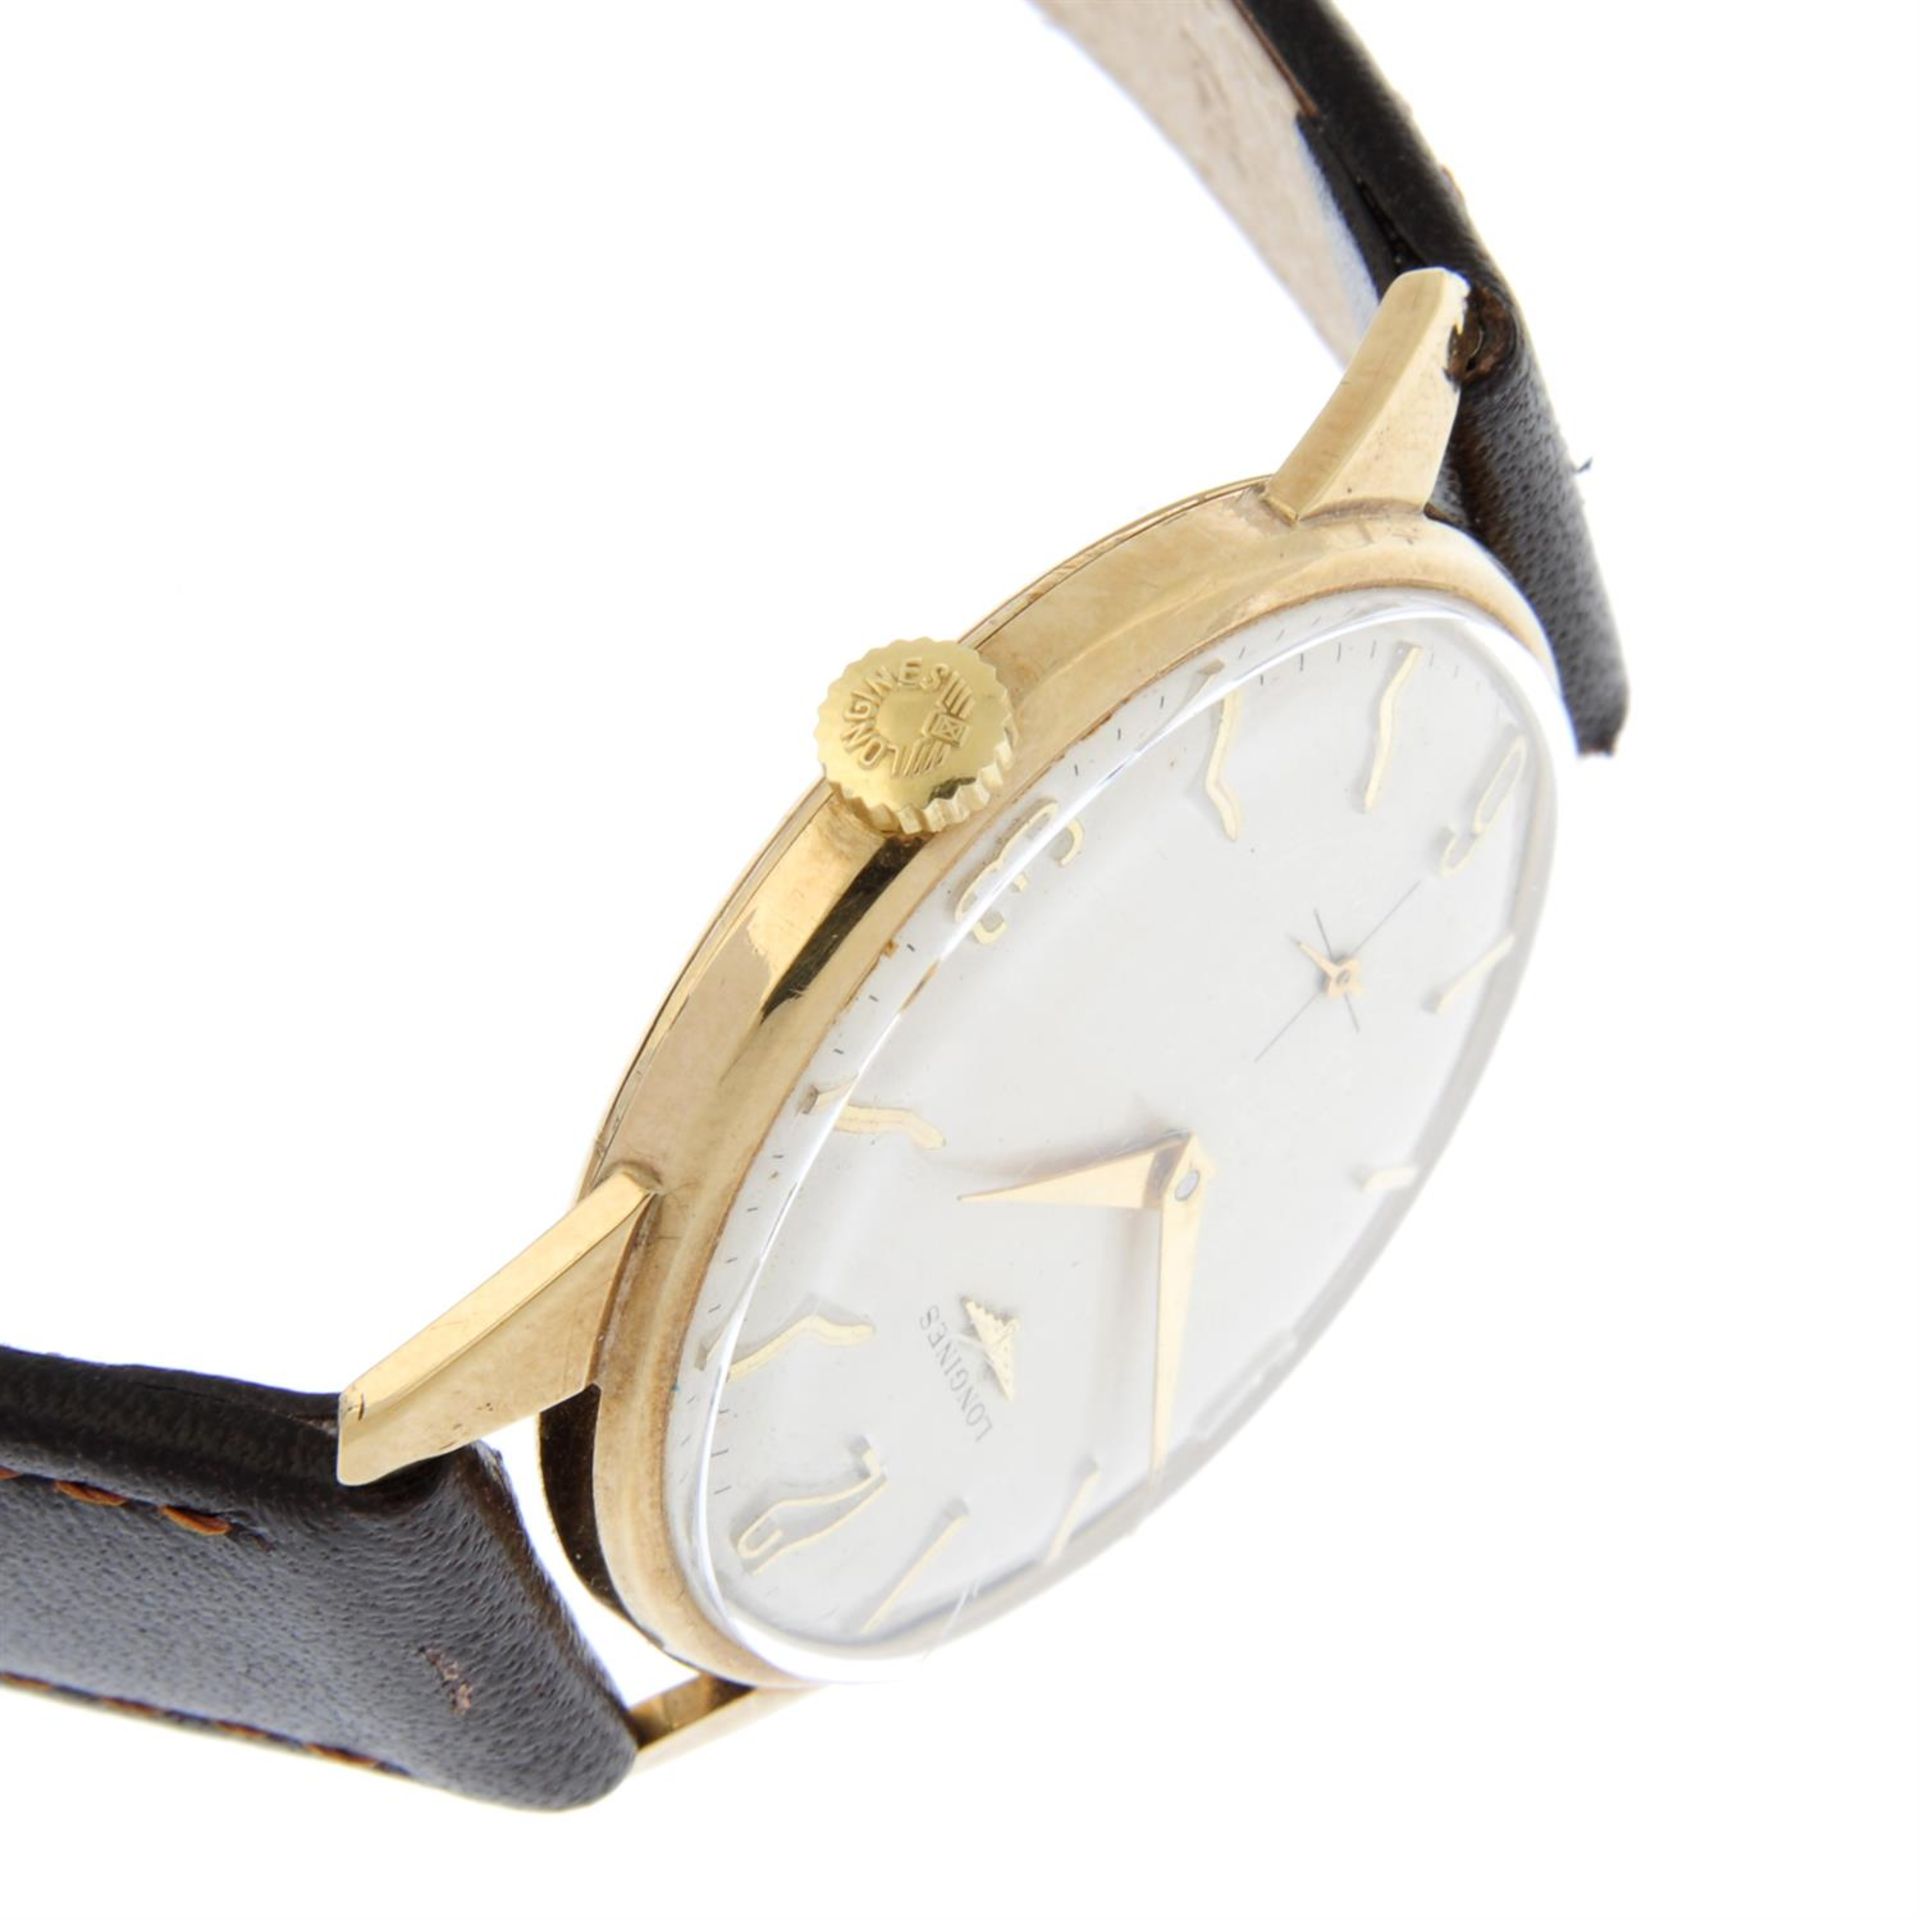 LONGINES - a yellow metal wrist watch, 33mm. - Image 3 of 4